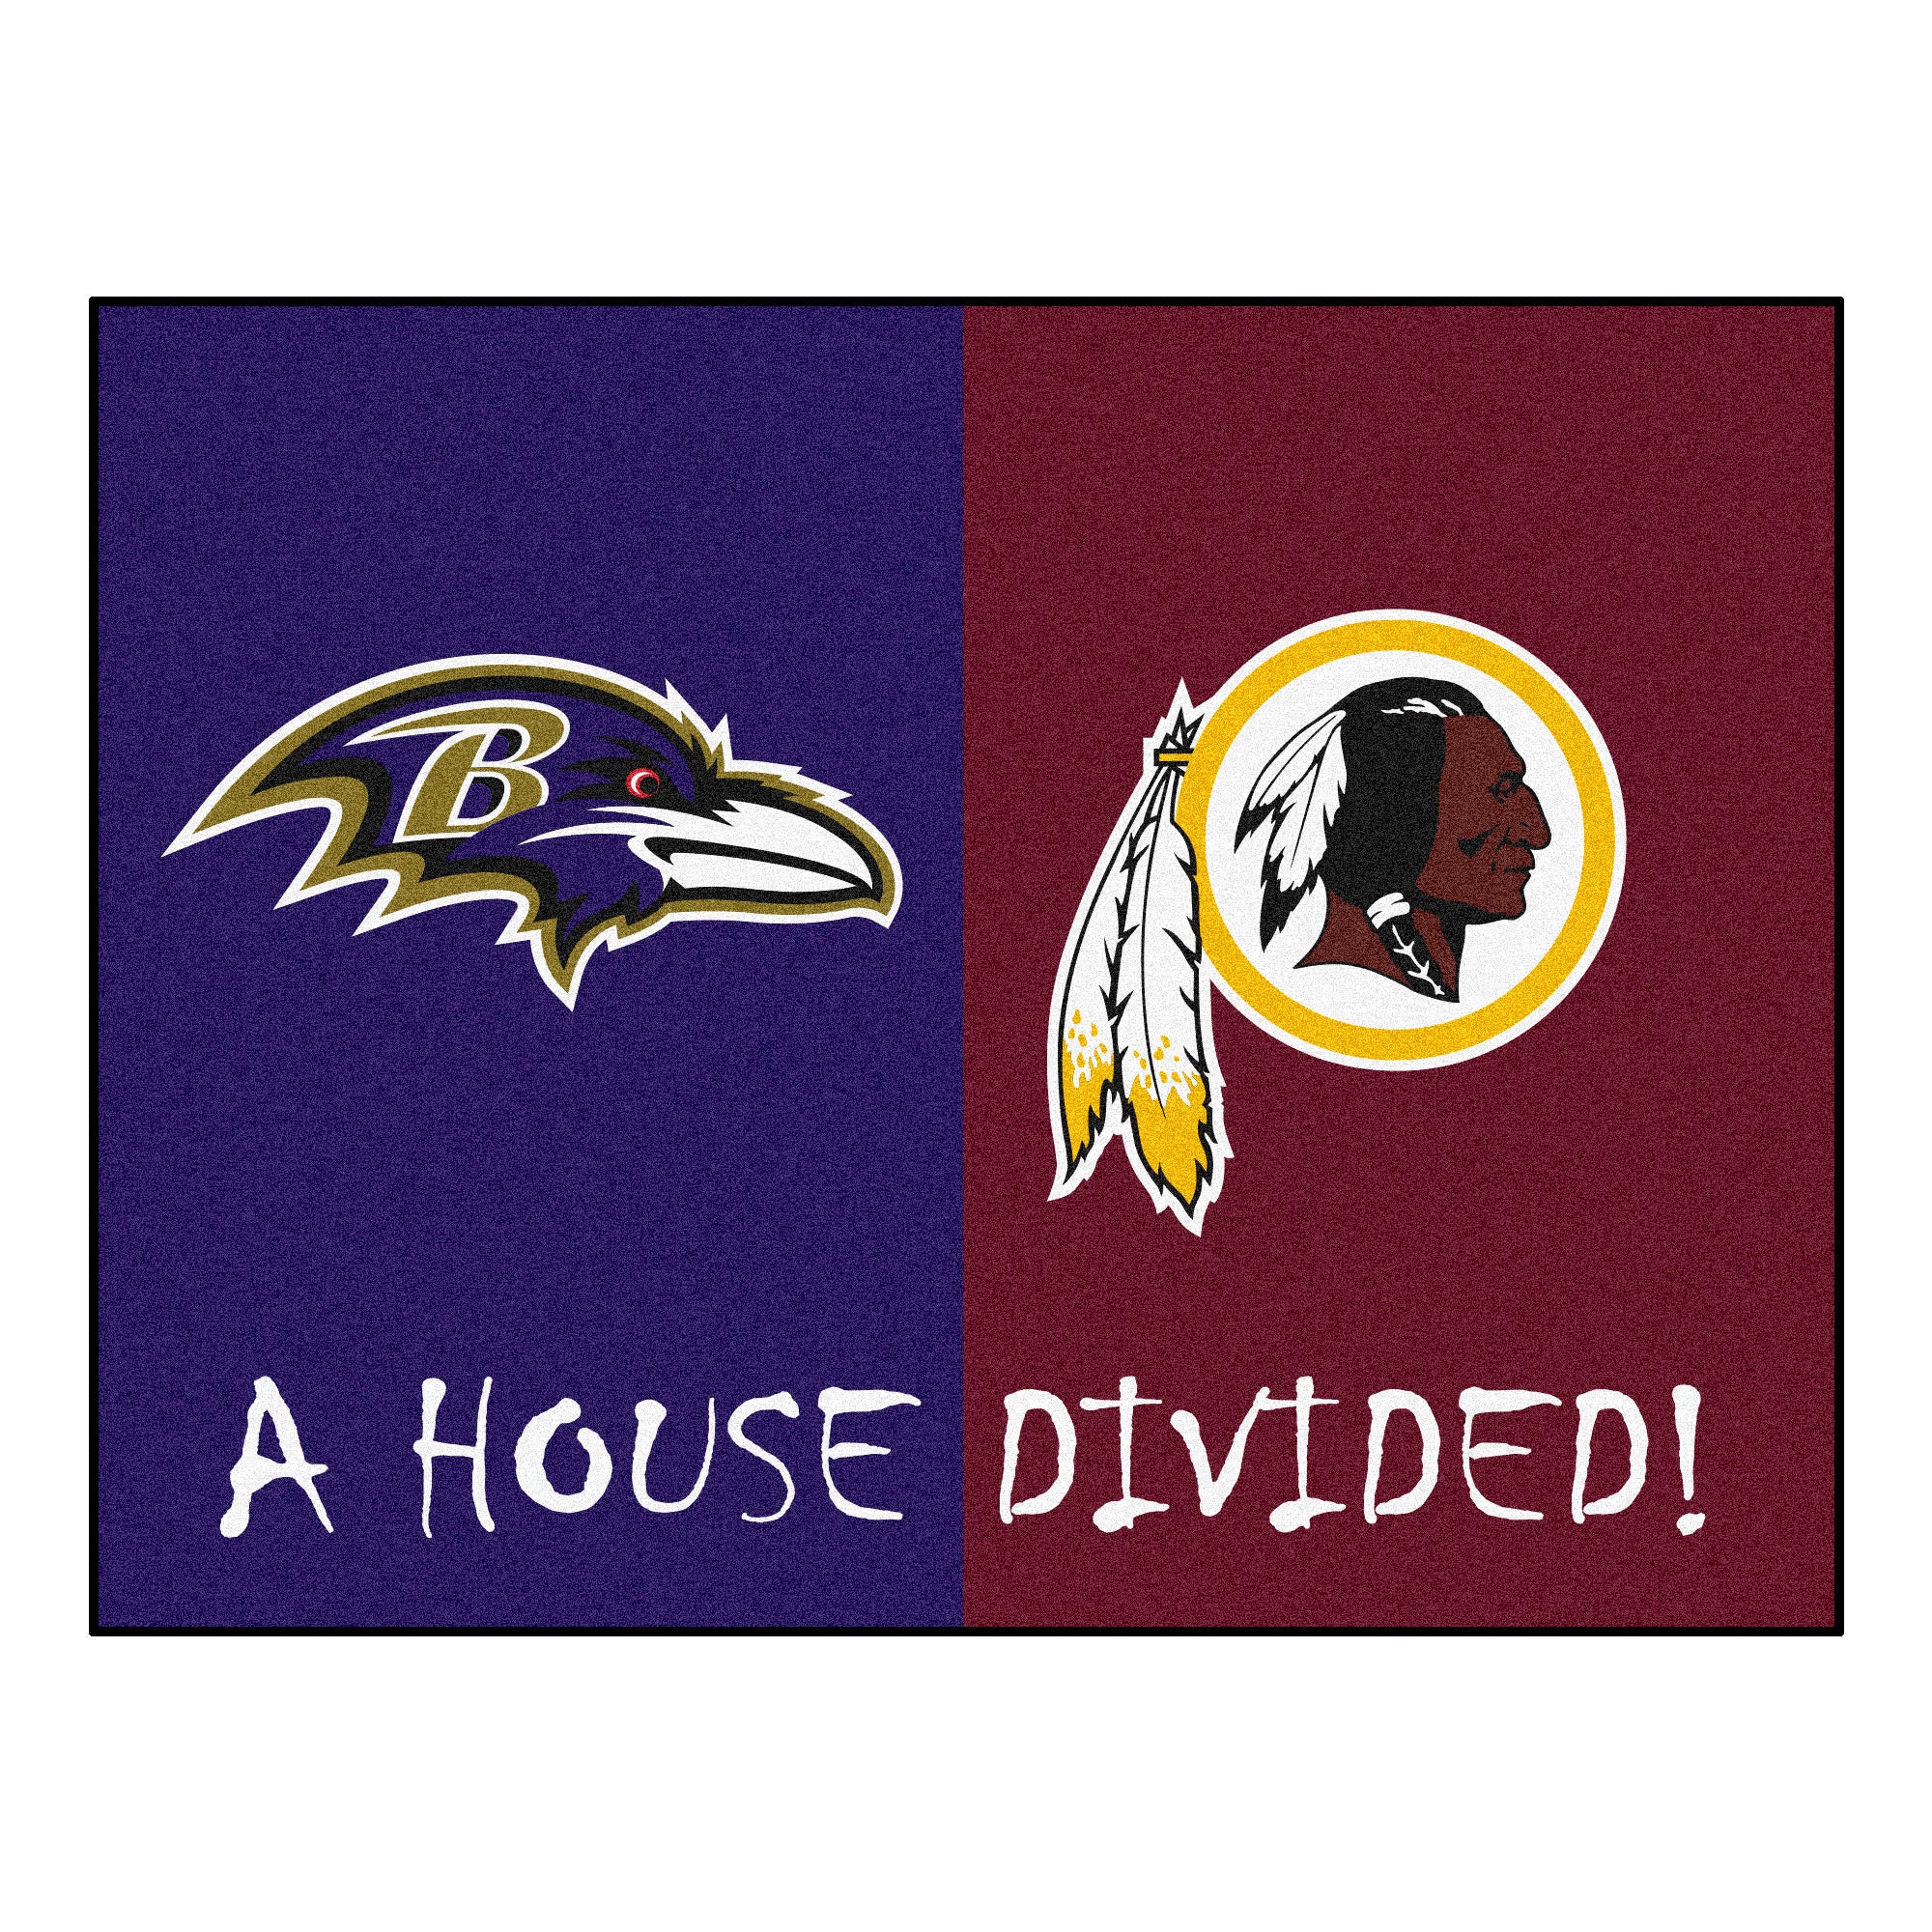 NFL House Divided - Ravens / Redskins House Divided Mat